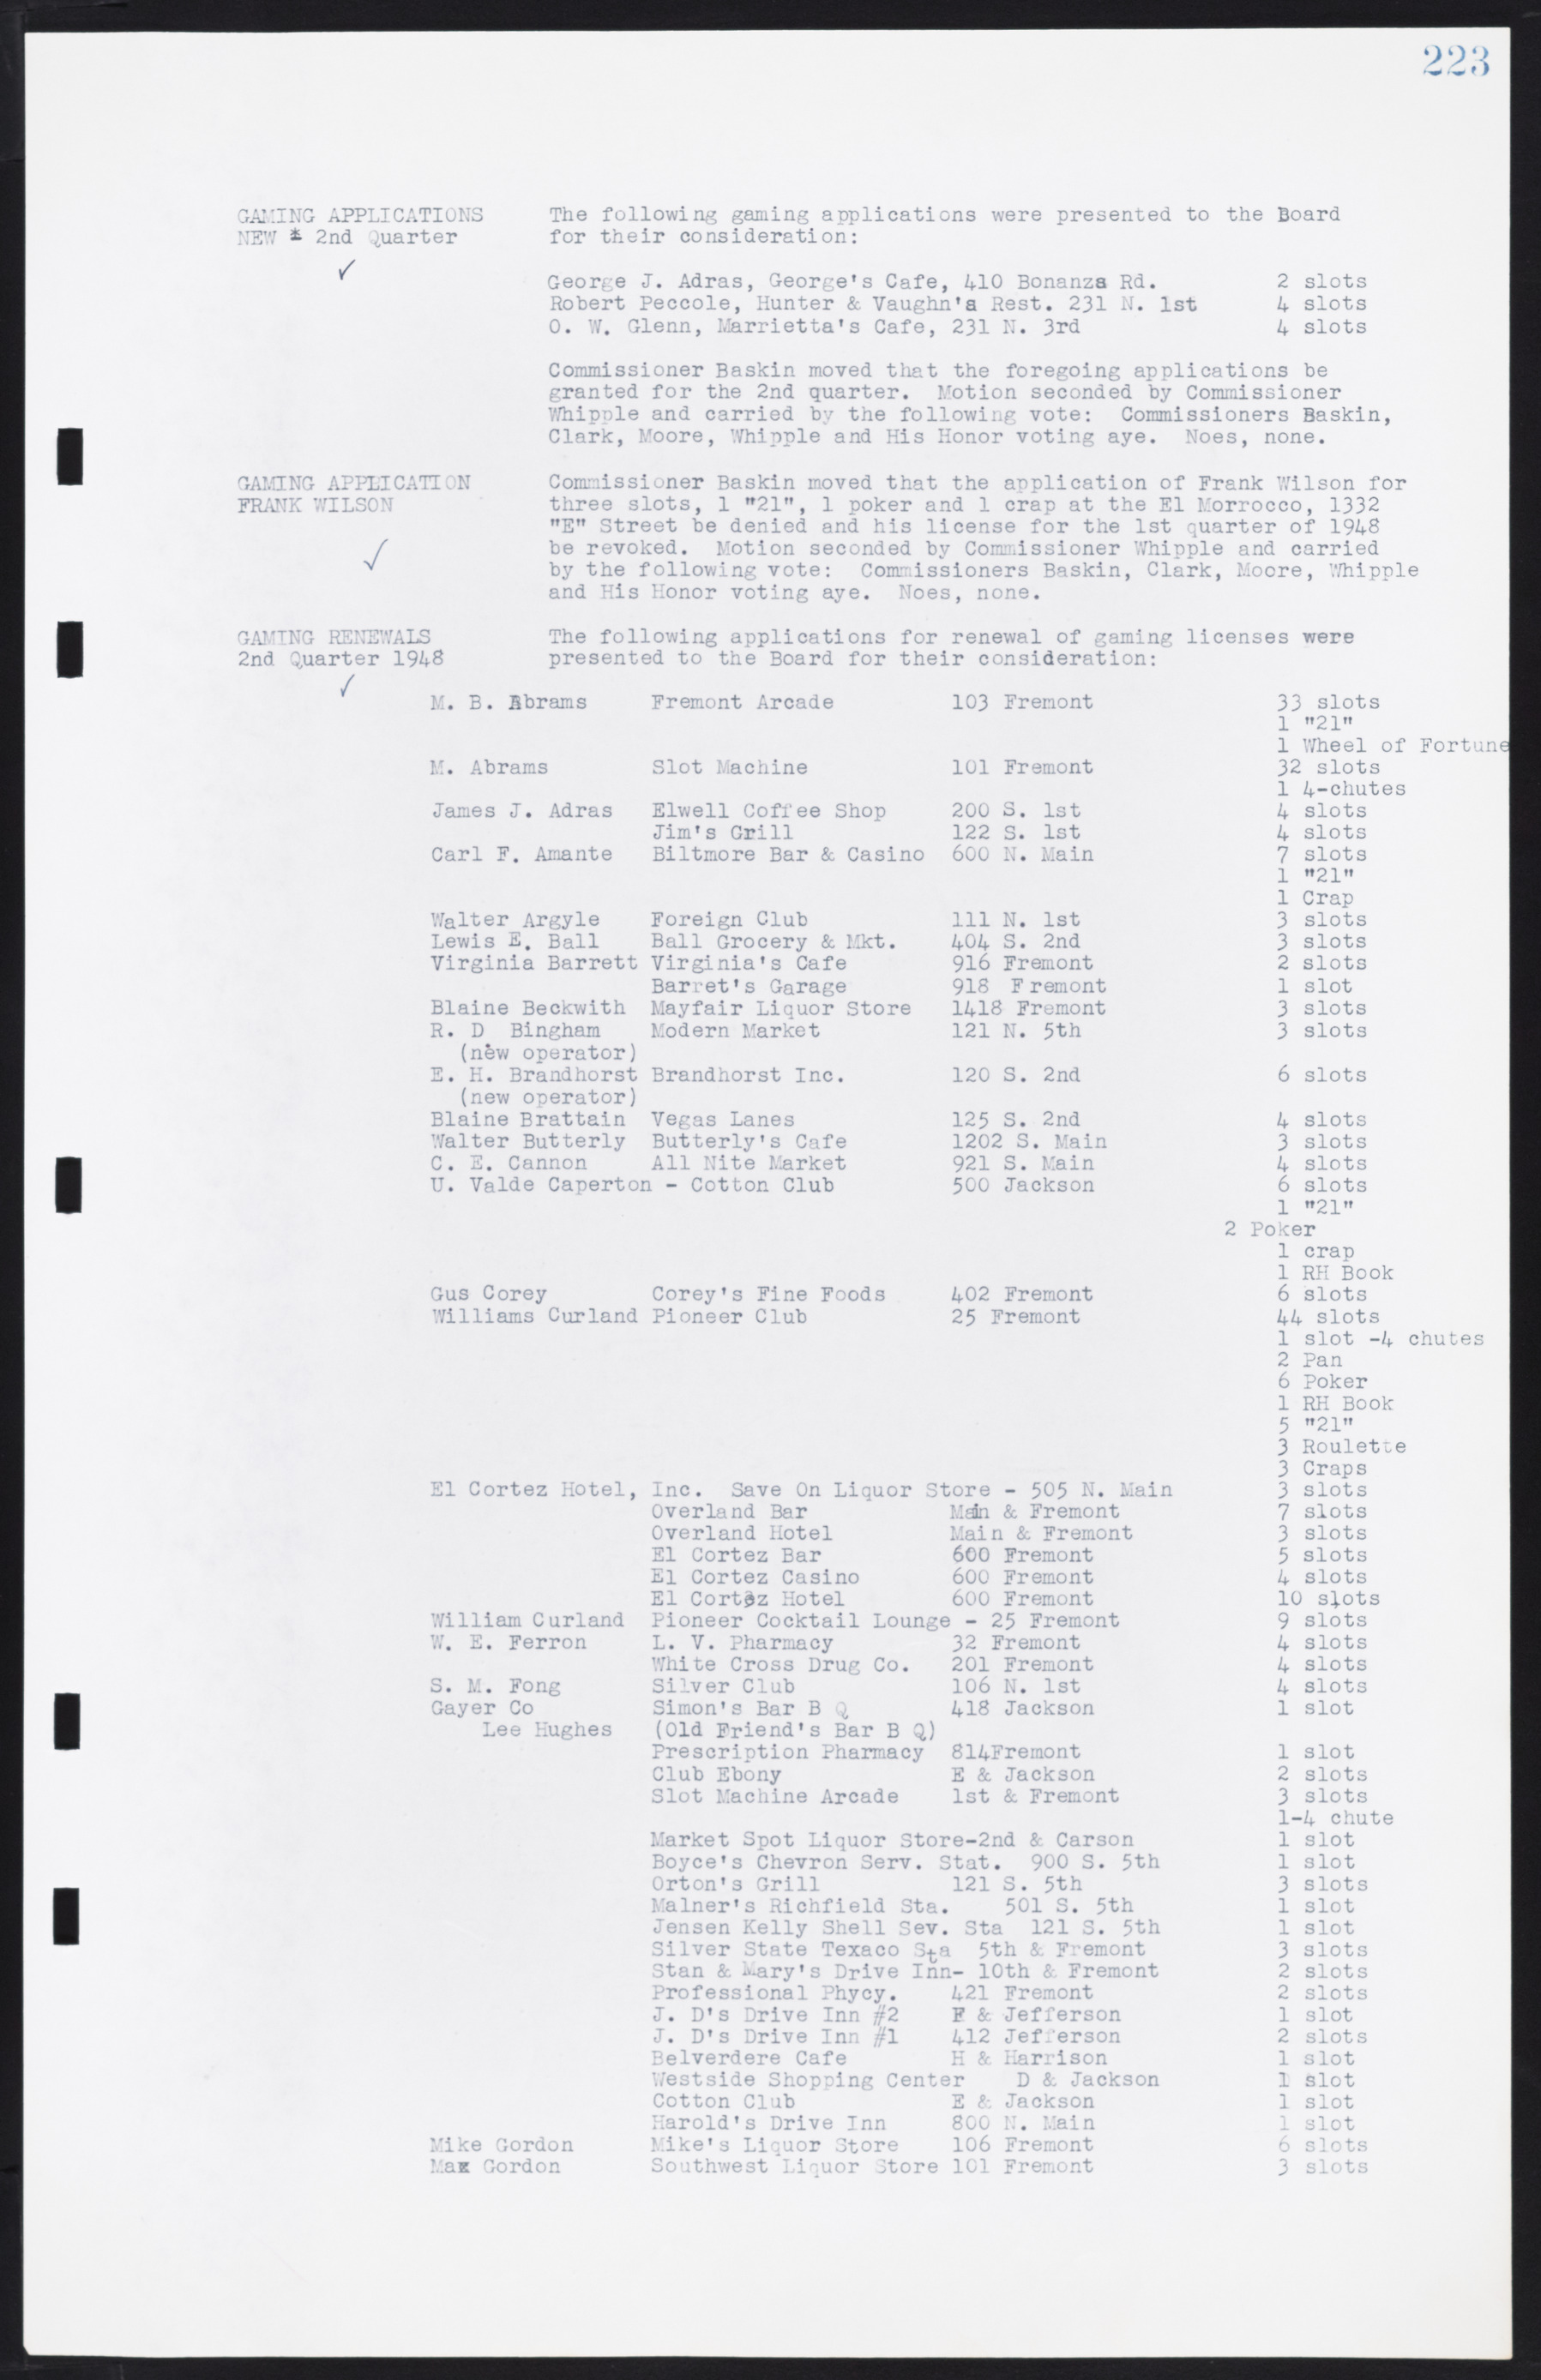 Las Vegas City Commission Minutes, January 7, 1947 to October 26, 1949, lvc000006-245